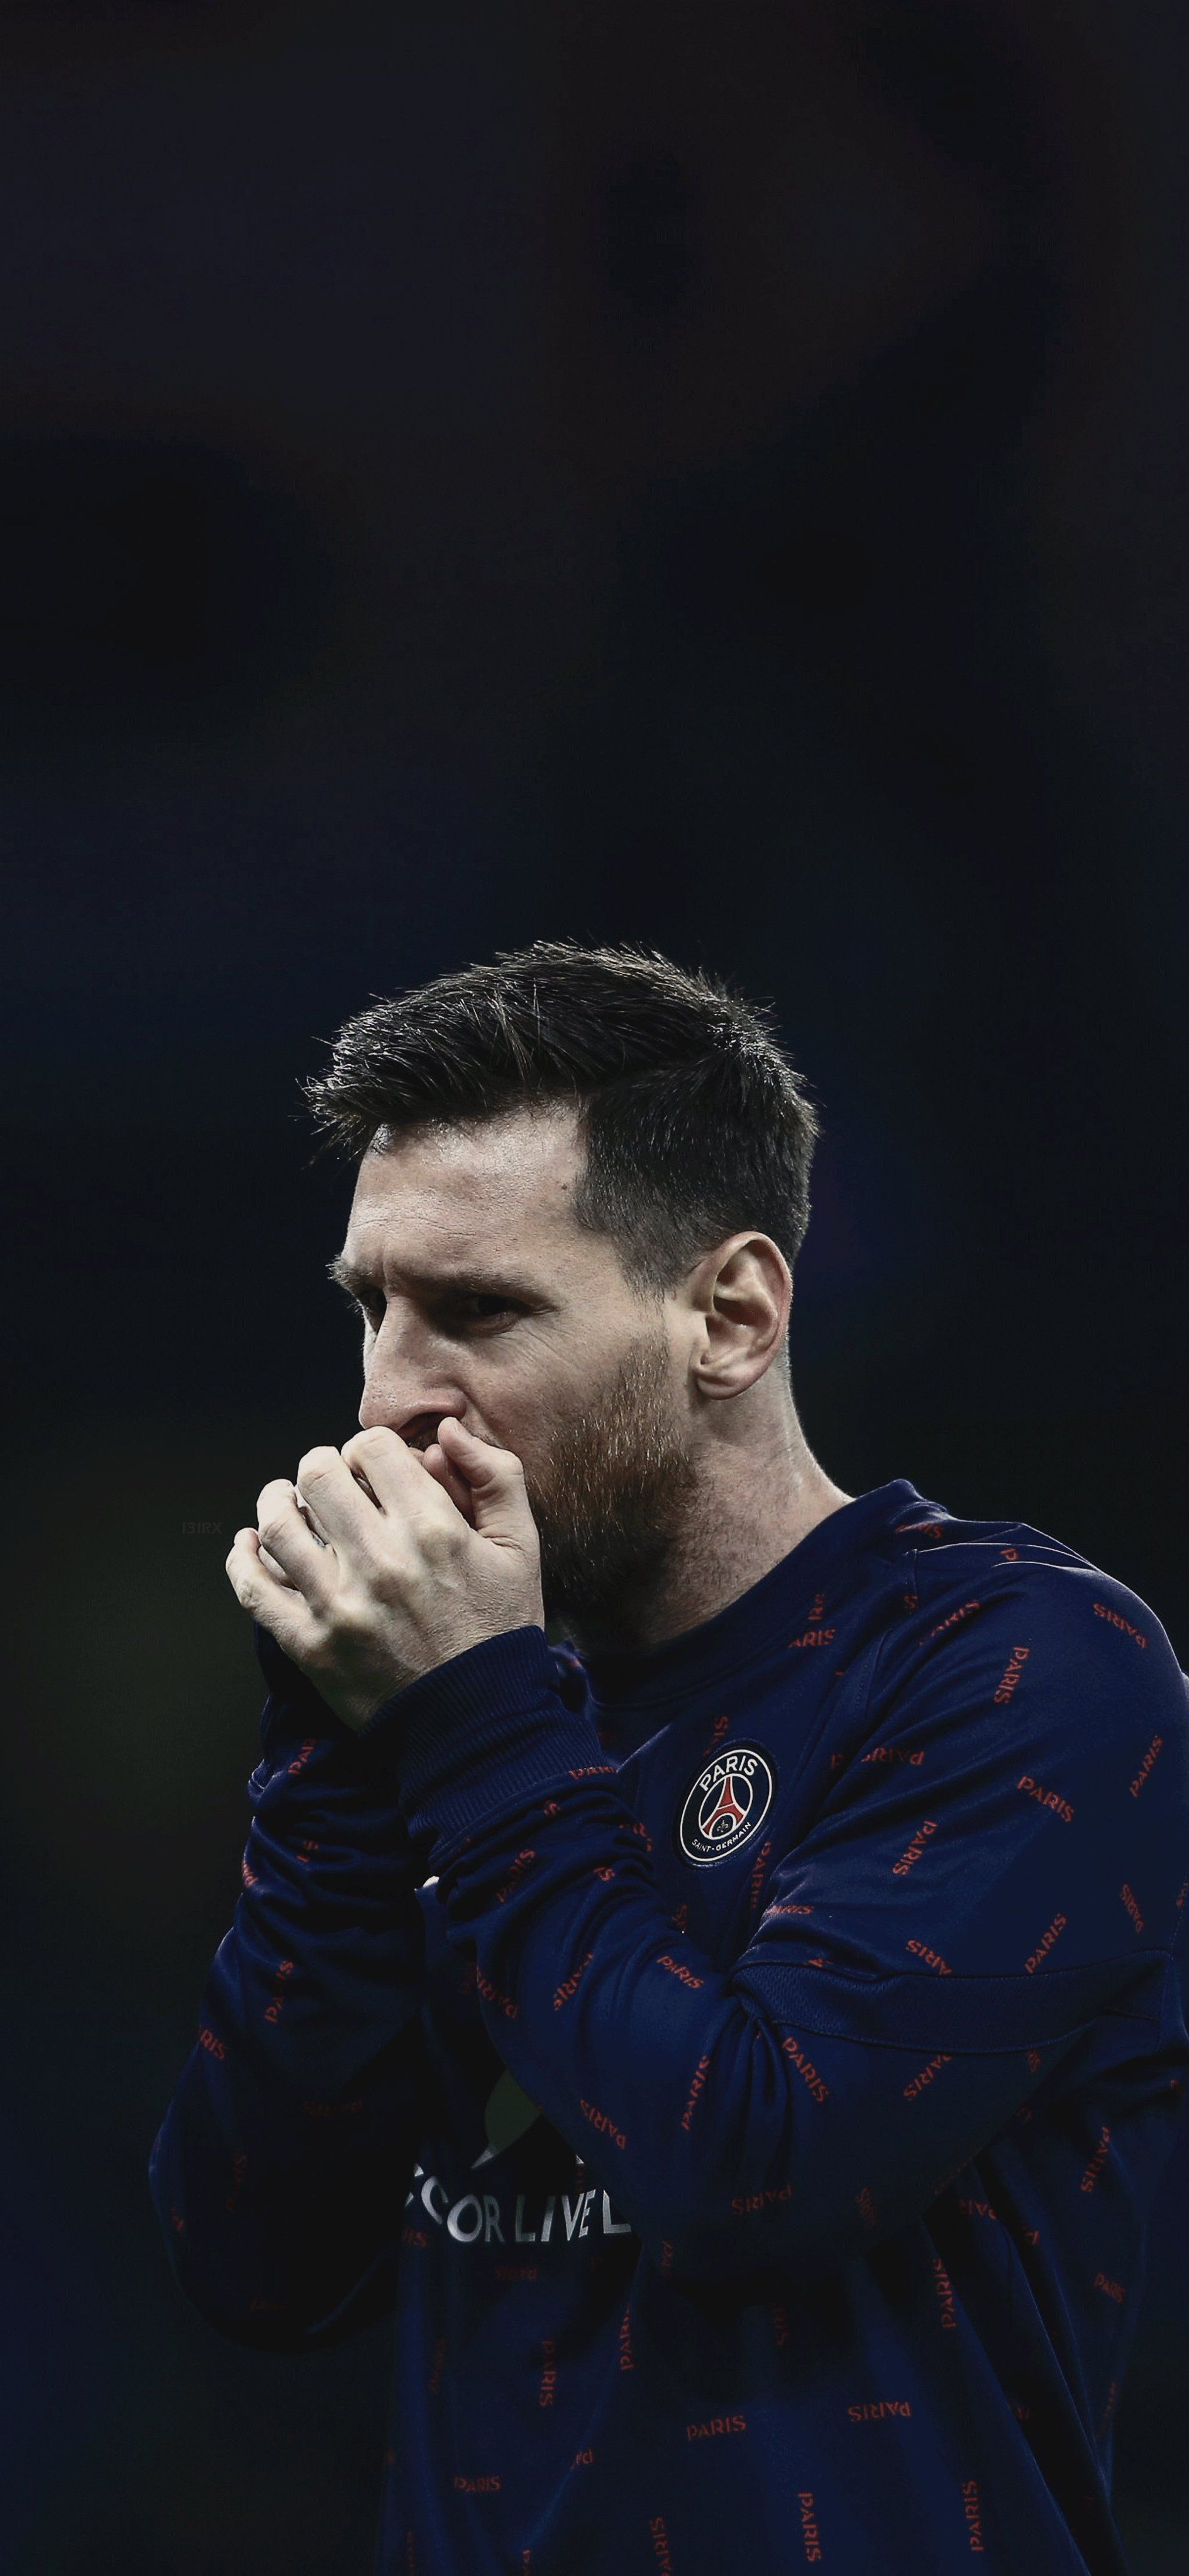 4K. Wallpaper Lionel Messi #Wallpaper #Messi #PSG